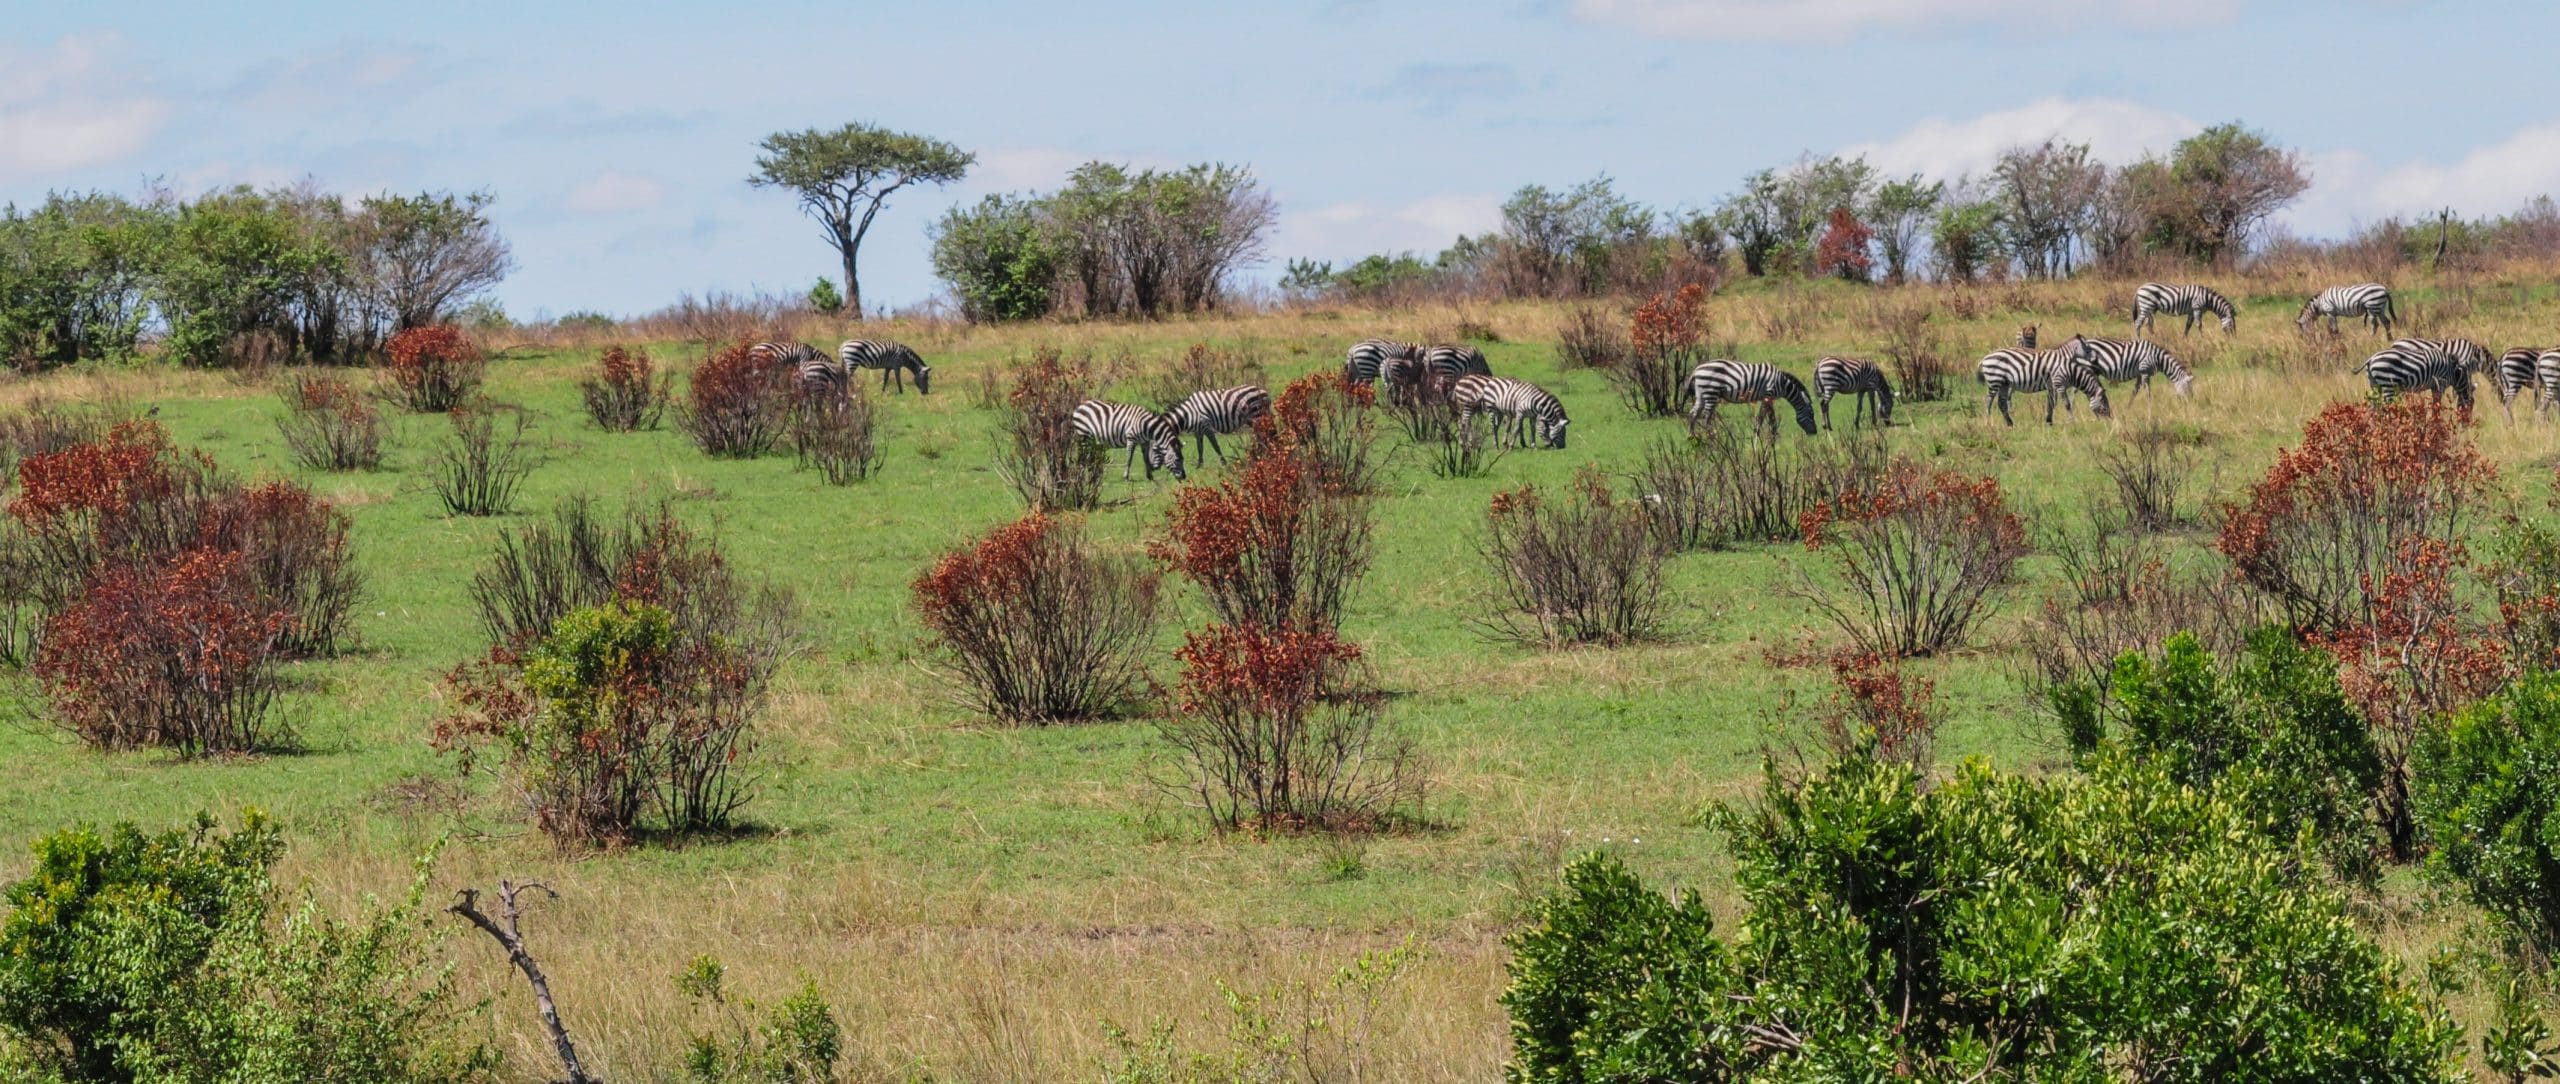 Wild Zebras And An Elephant In Kenya.